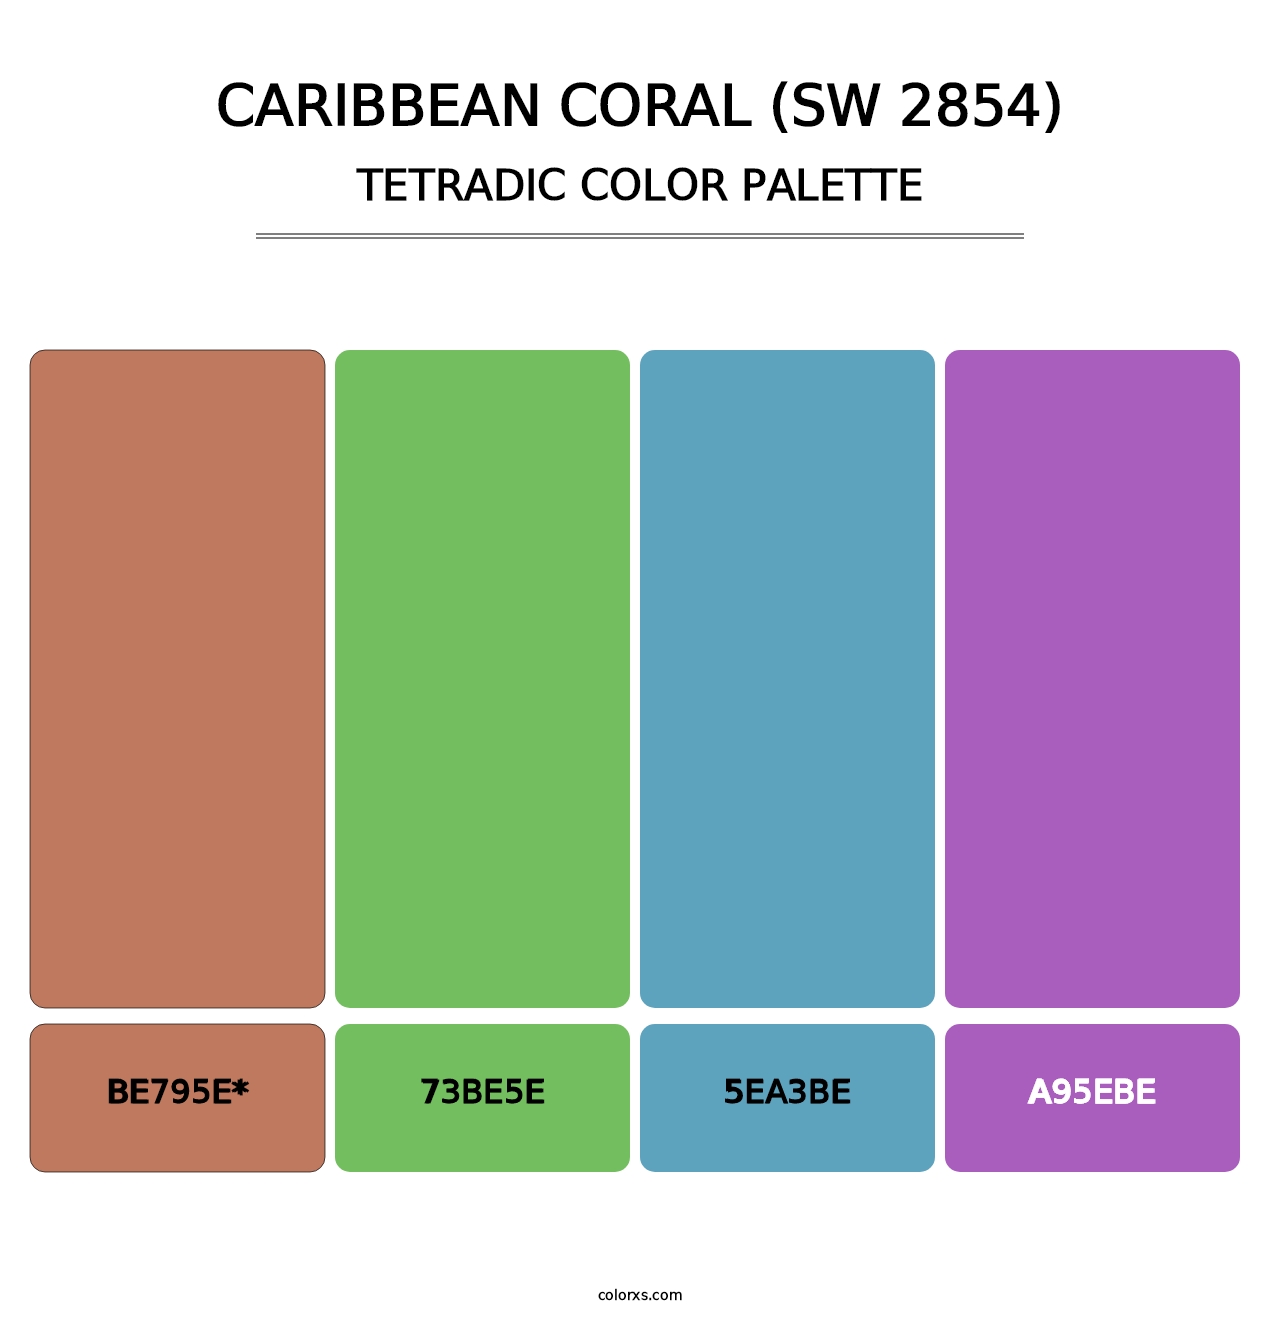 Caribbean Coral (SW 2854) - Tetradic Color Palette